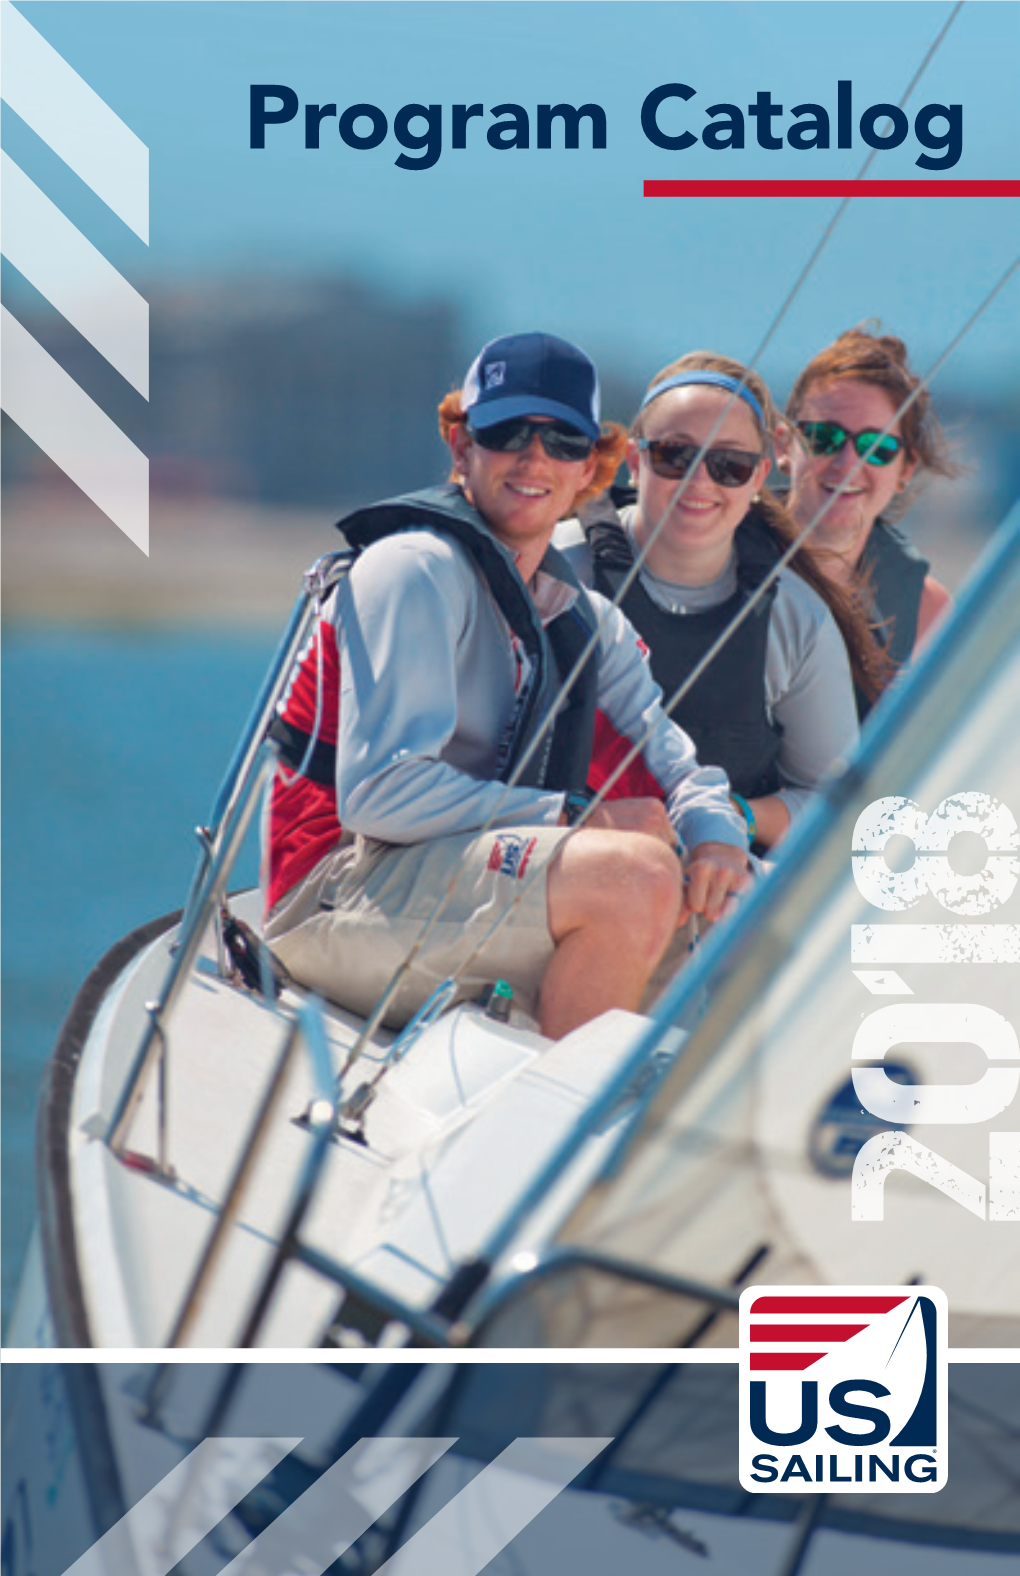 Program Catalog About US Sailing